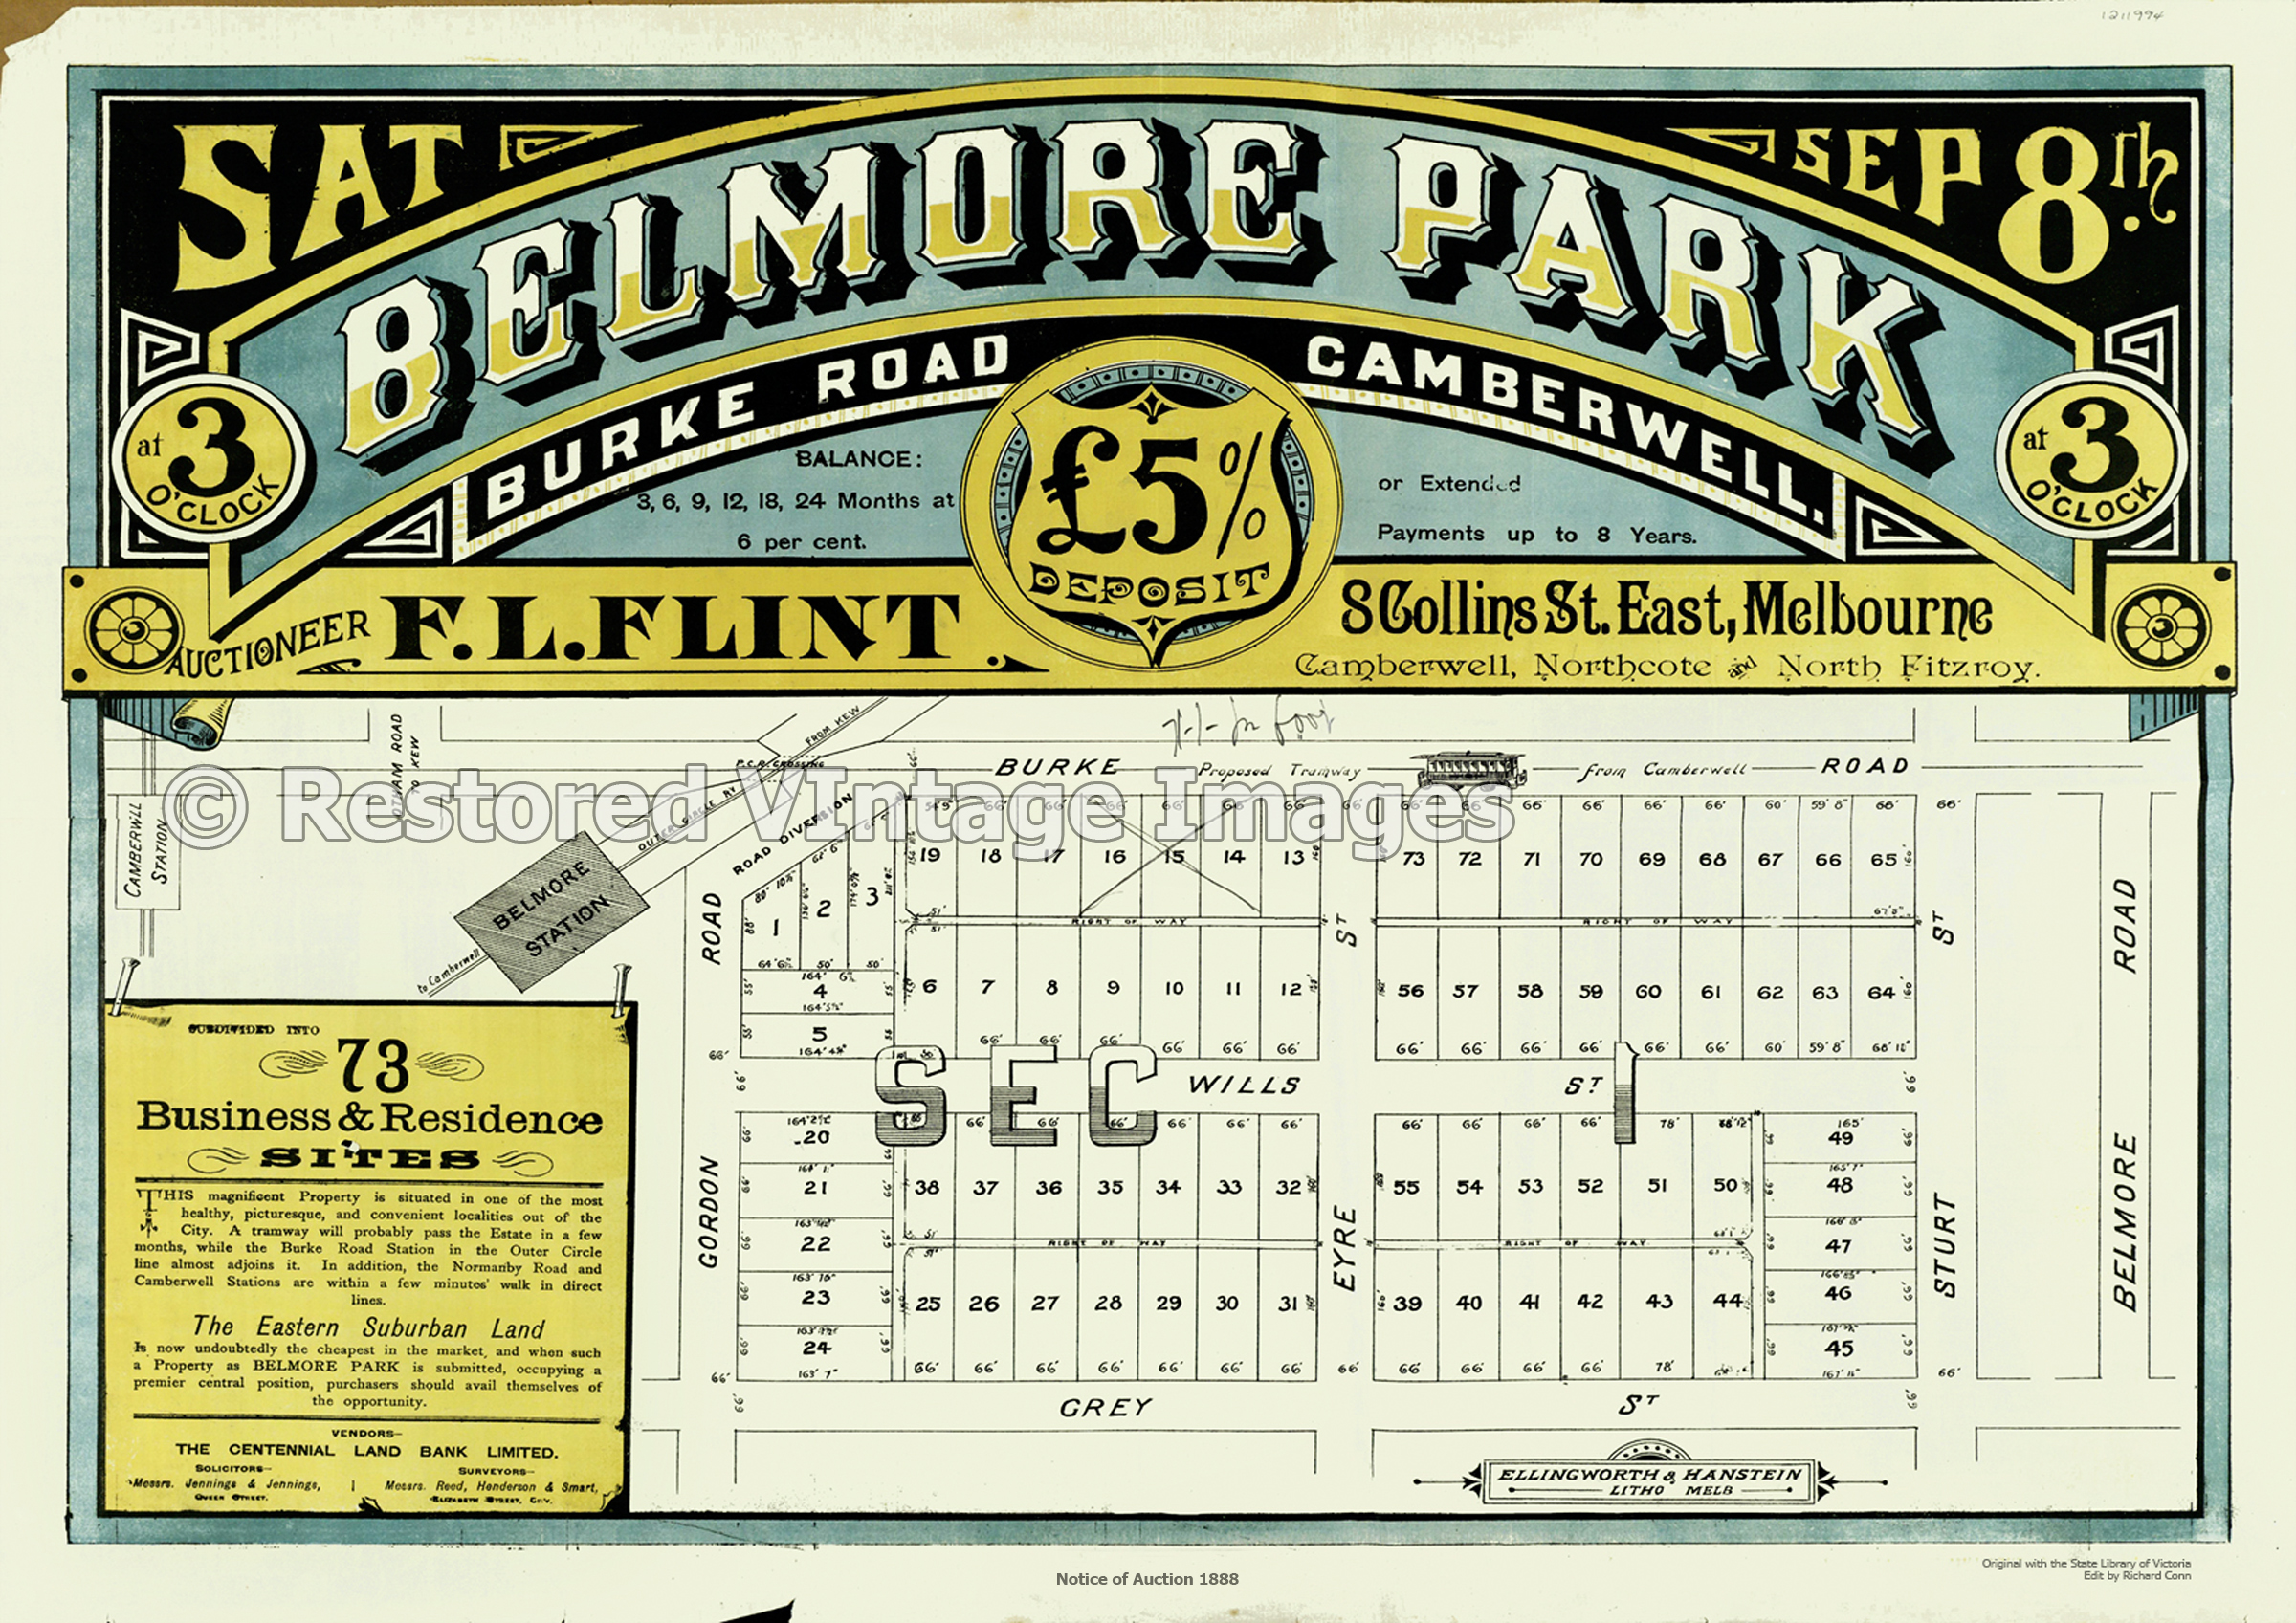 Belmore Park 8th September 1888 – Balwyn